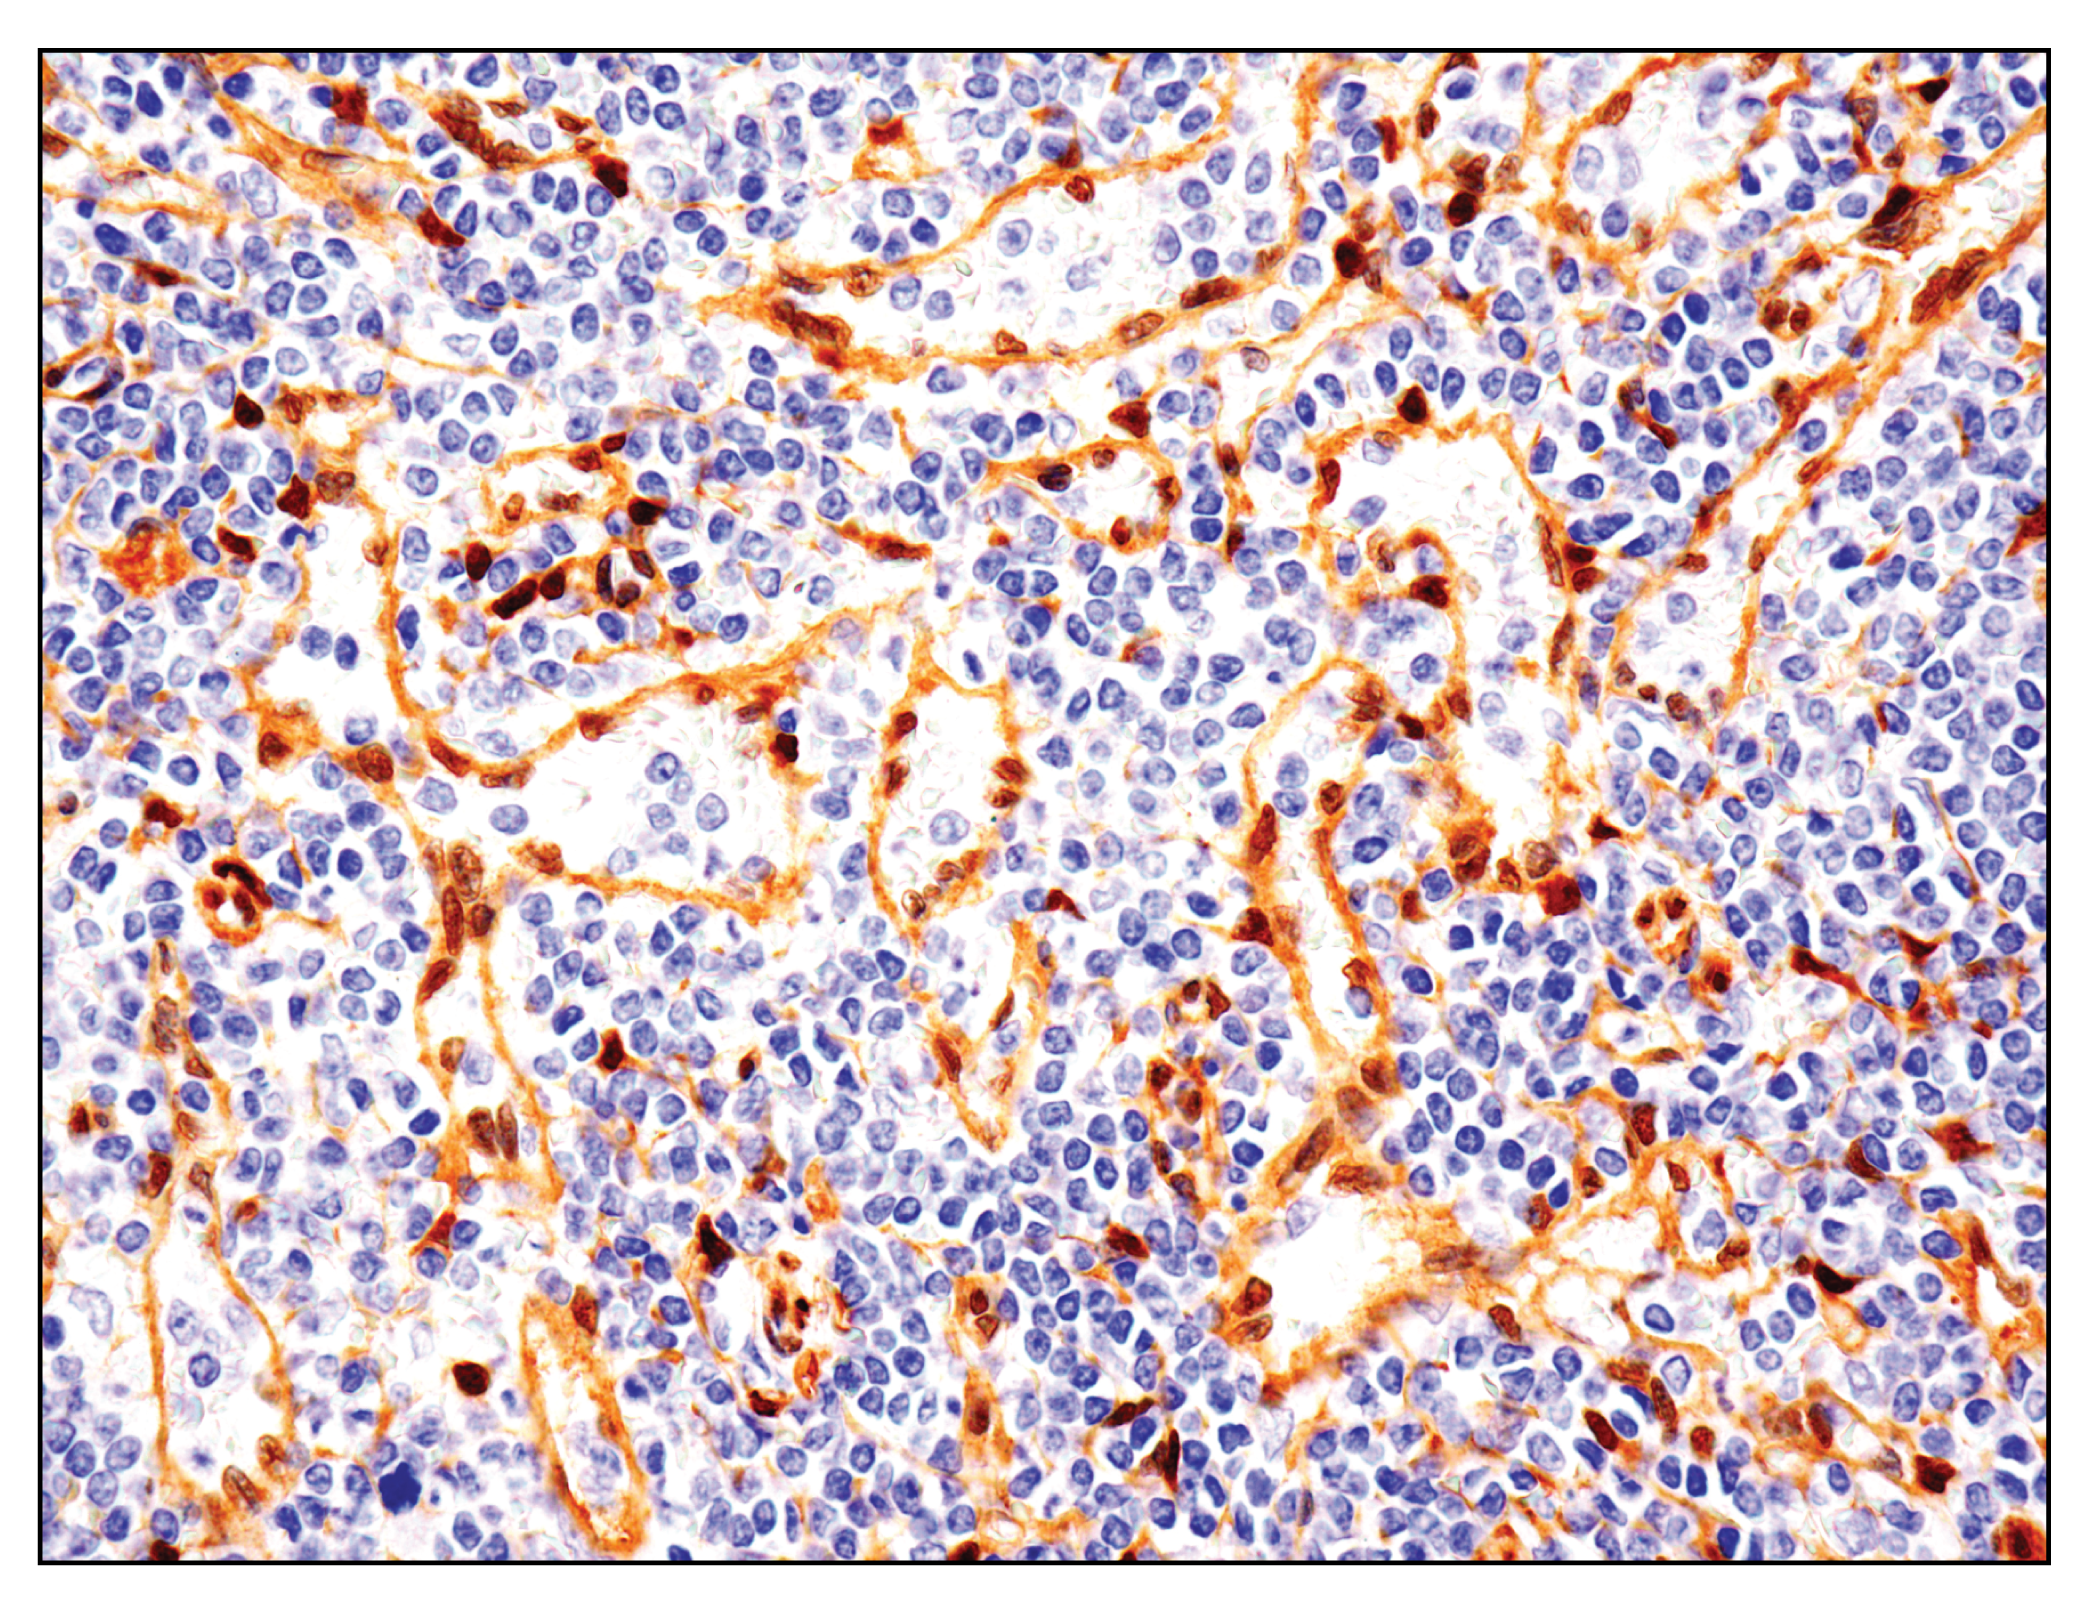  Image 40: Small Cell Lung Cancer Biomarker Antibody Sampler Kit